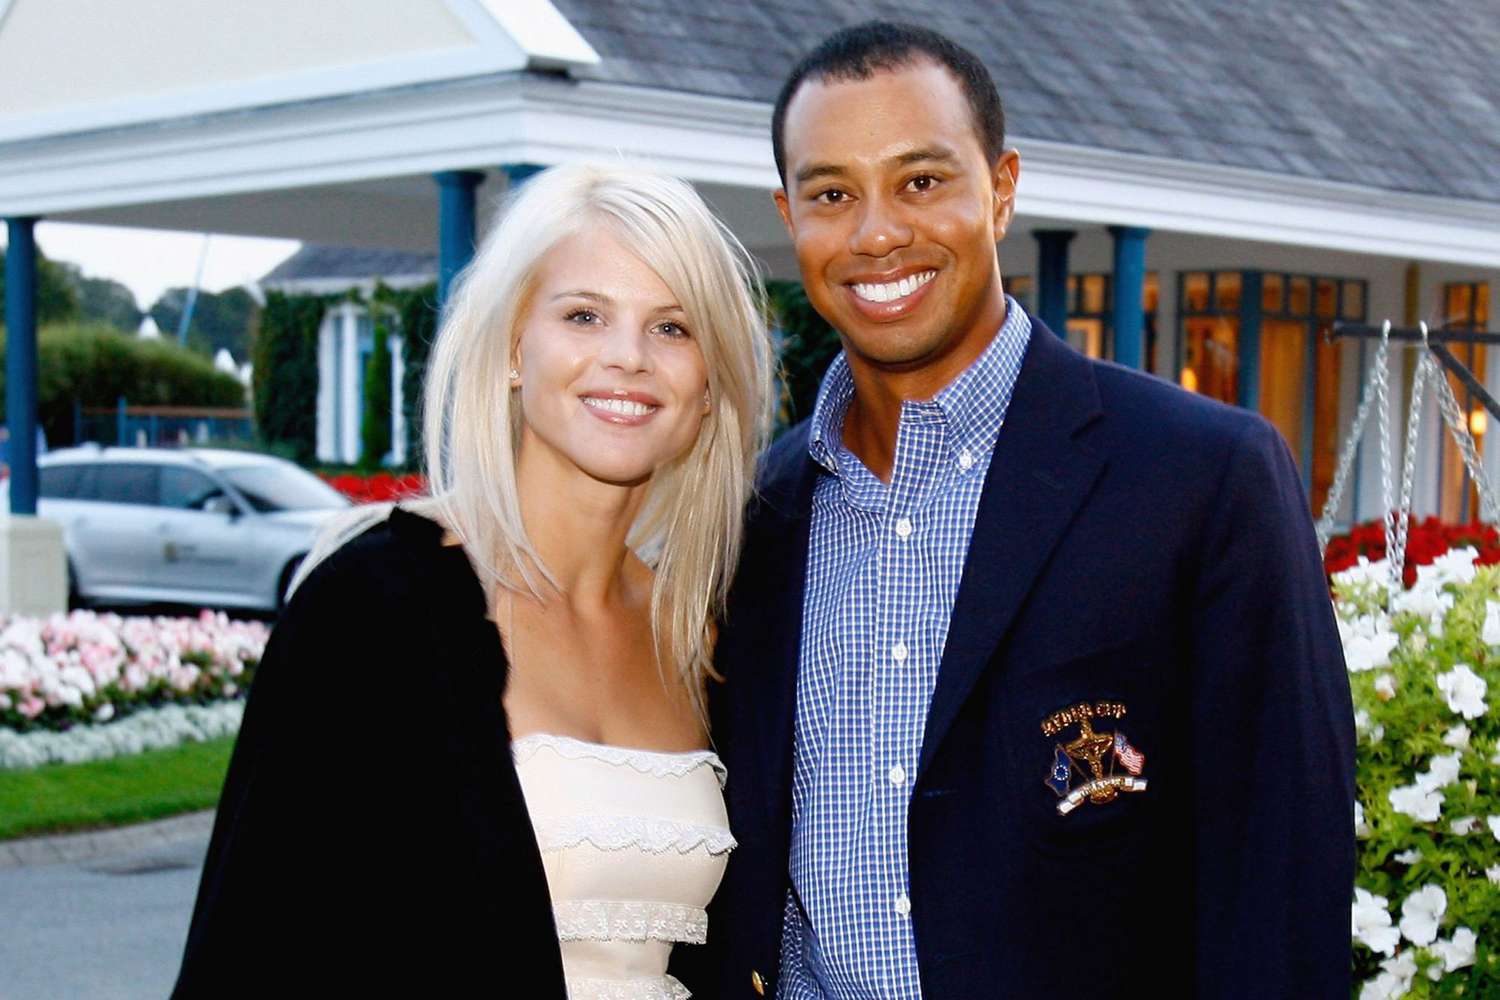    Tiger Woods con hermoso, Novia Lindsey Vonn 